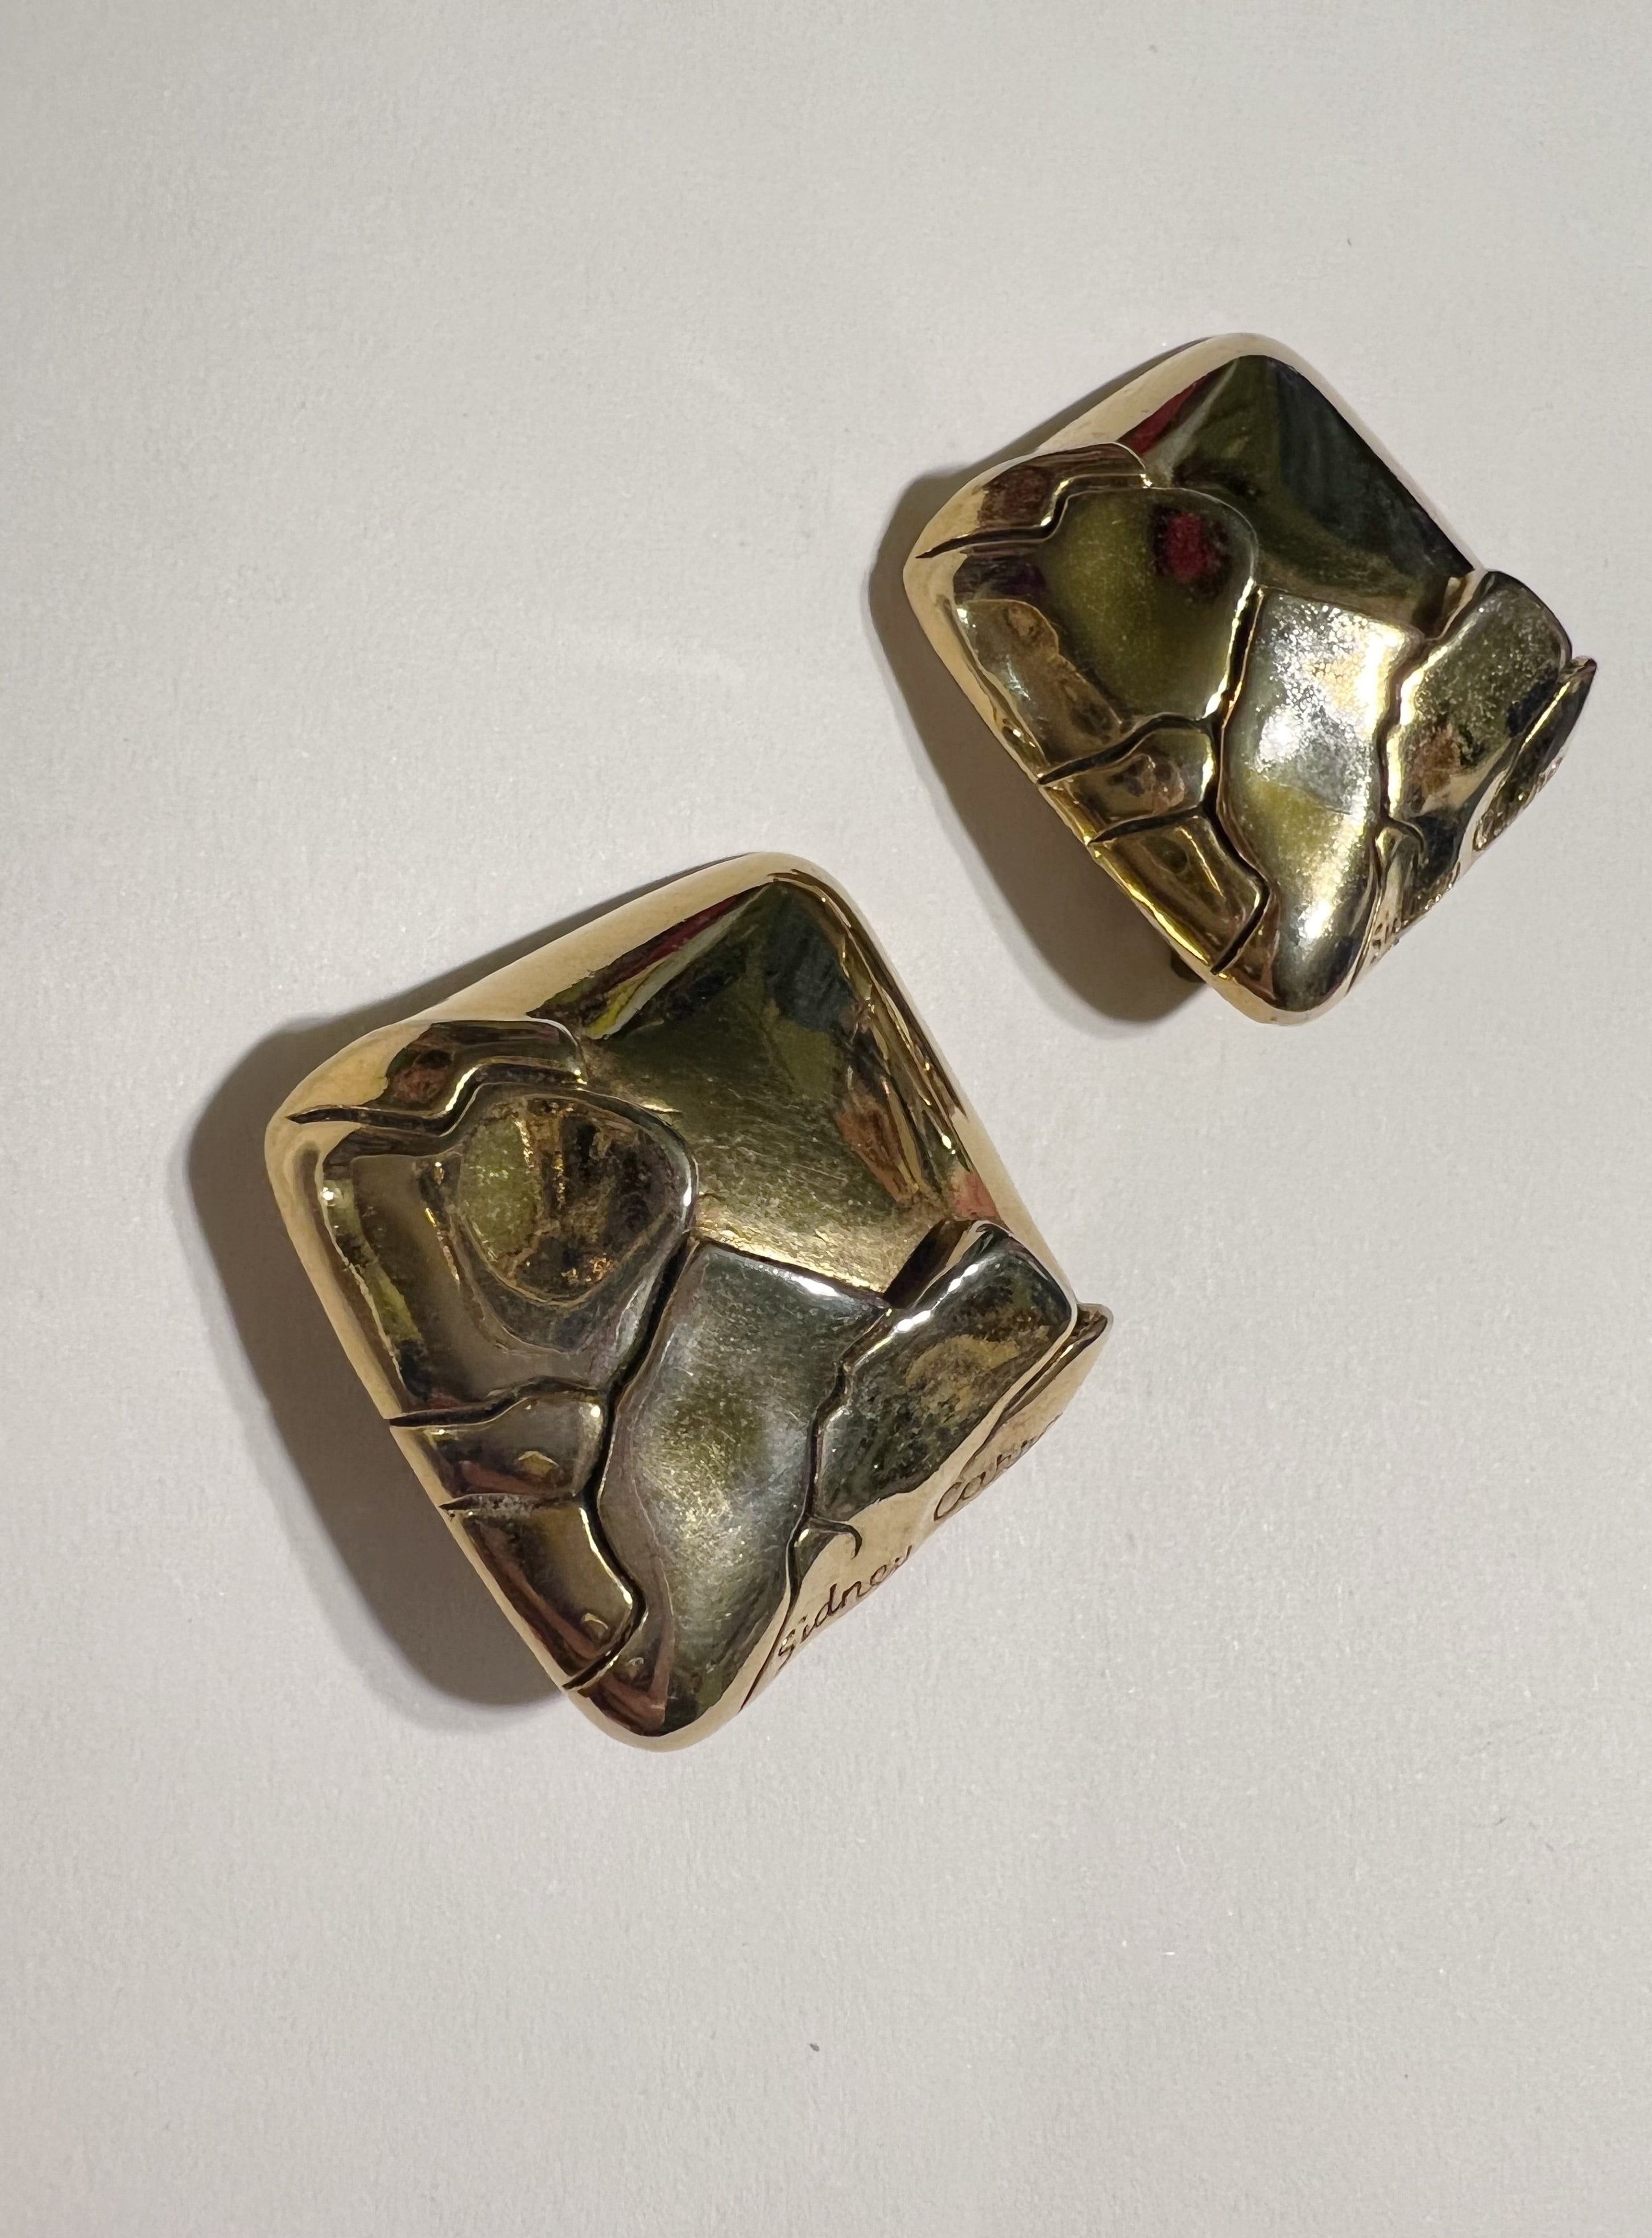 80s designer's gold earrings ( ヴィンテージ デザイナーズ ゴールド イヤリング )